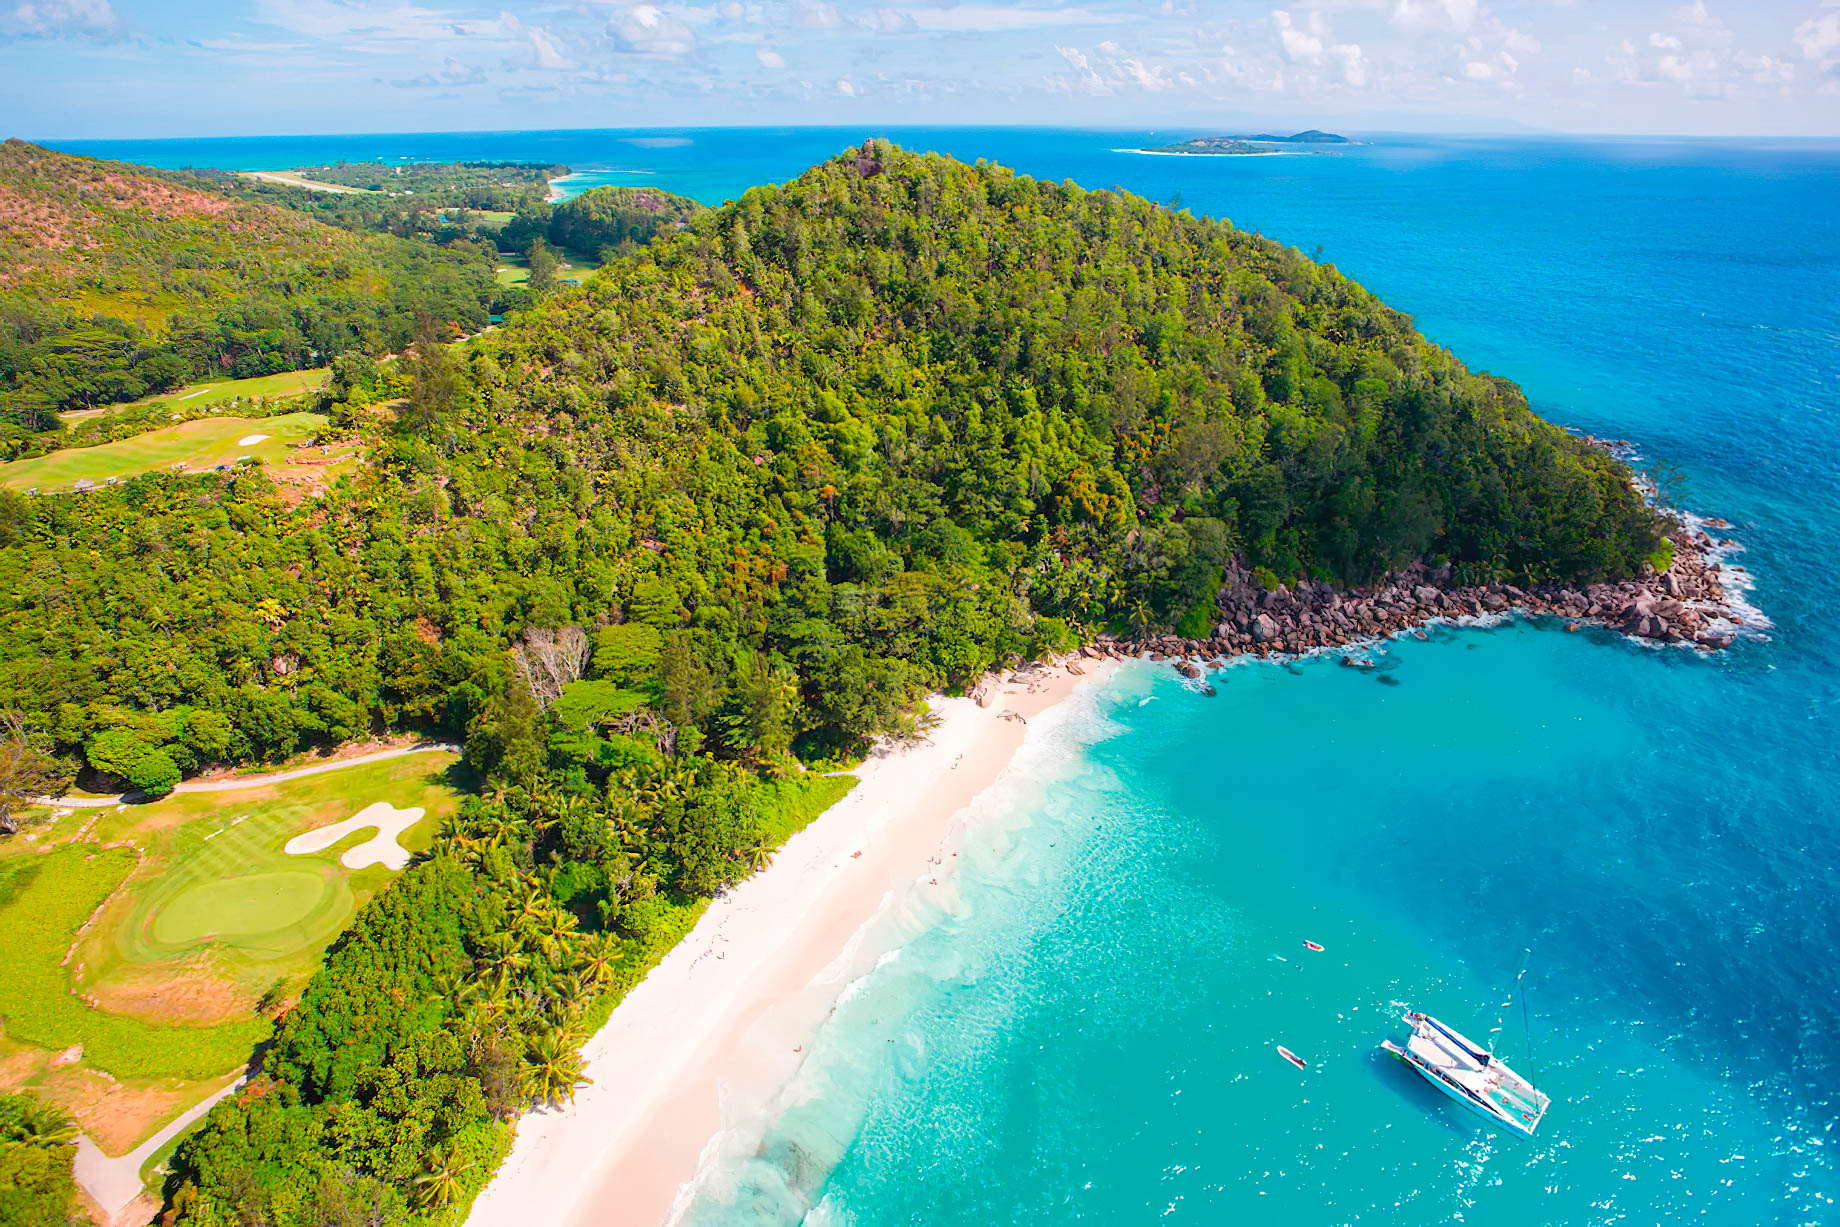 Constance Lemuria Resort - Praslin, Seychelles - Sailing Aerial View